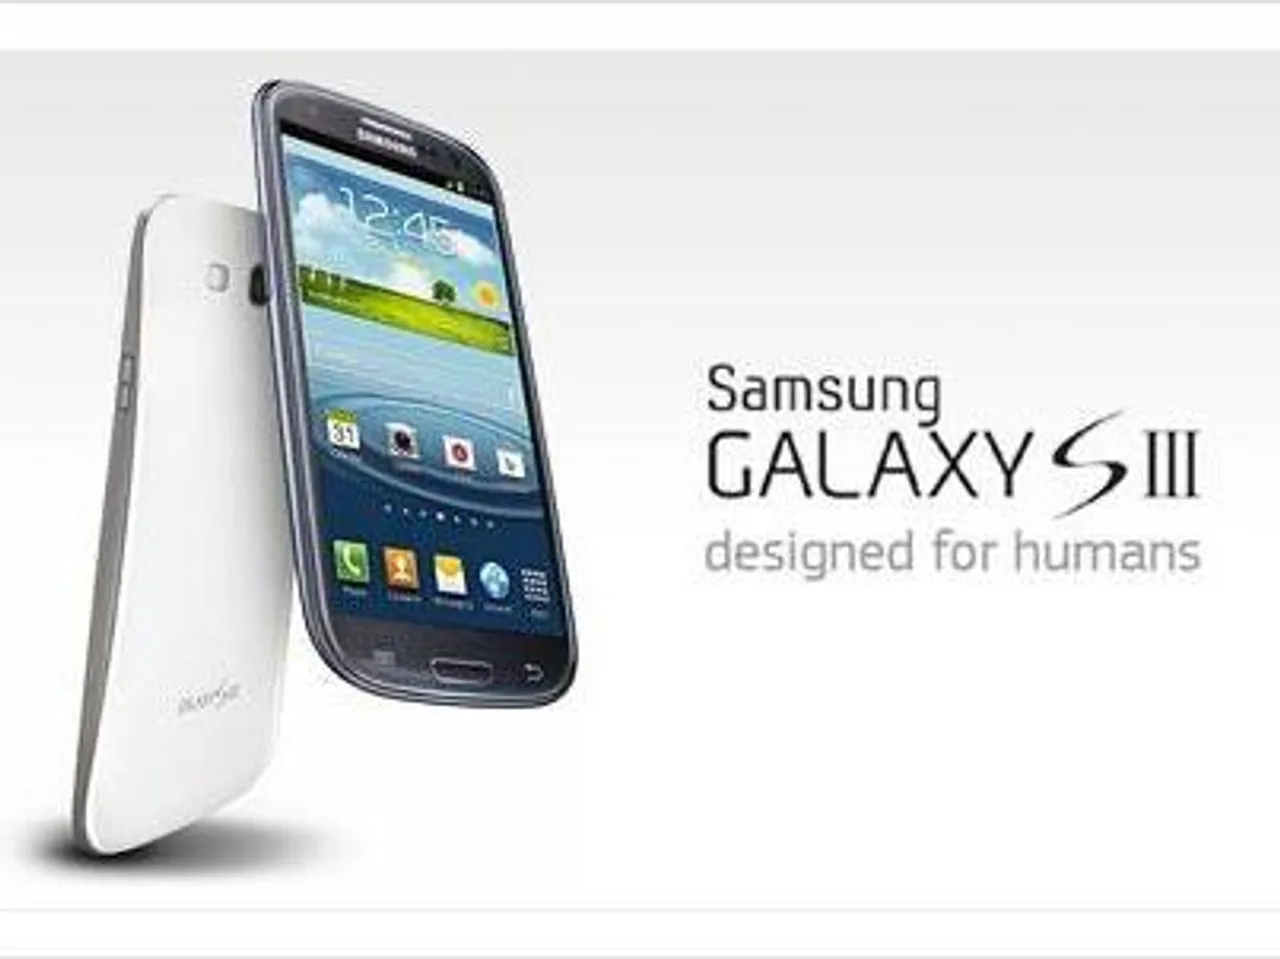 Homeshop18's Samsung Galaxy SIII Contest on Facebook & Twitter